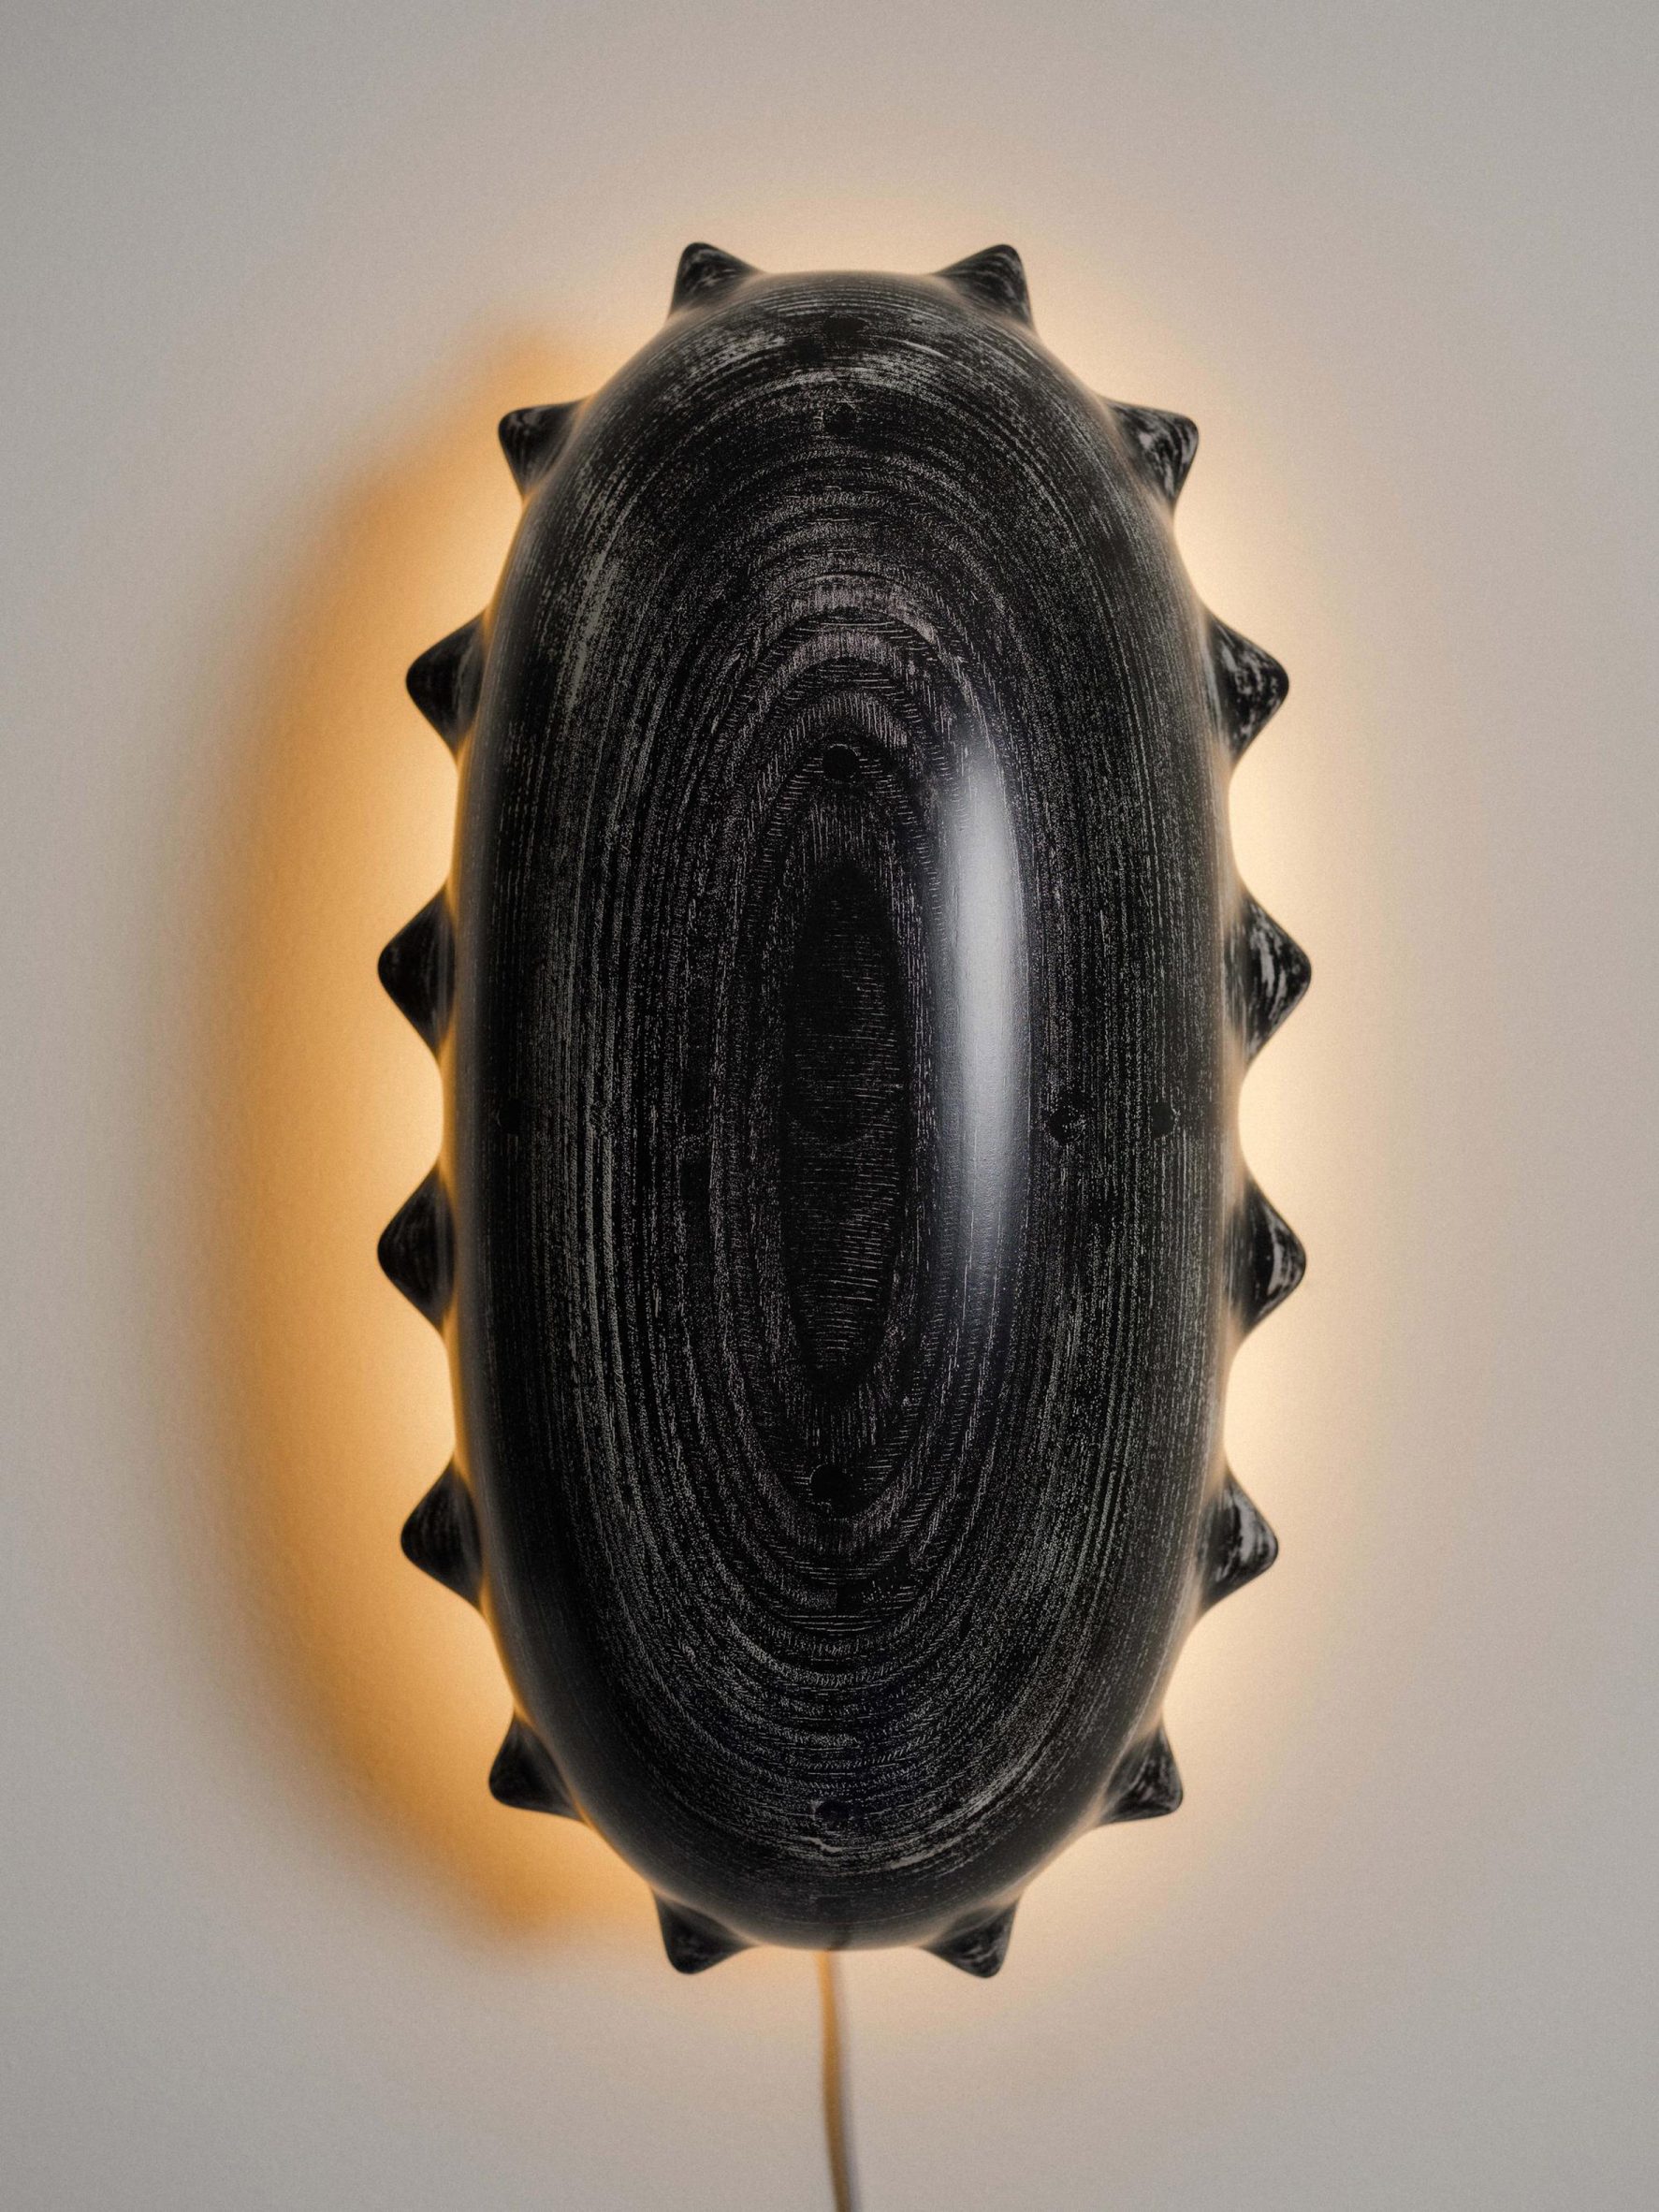 Lighting design that resembles a bug zapper